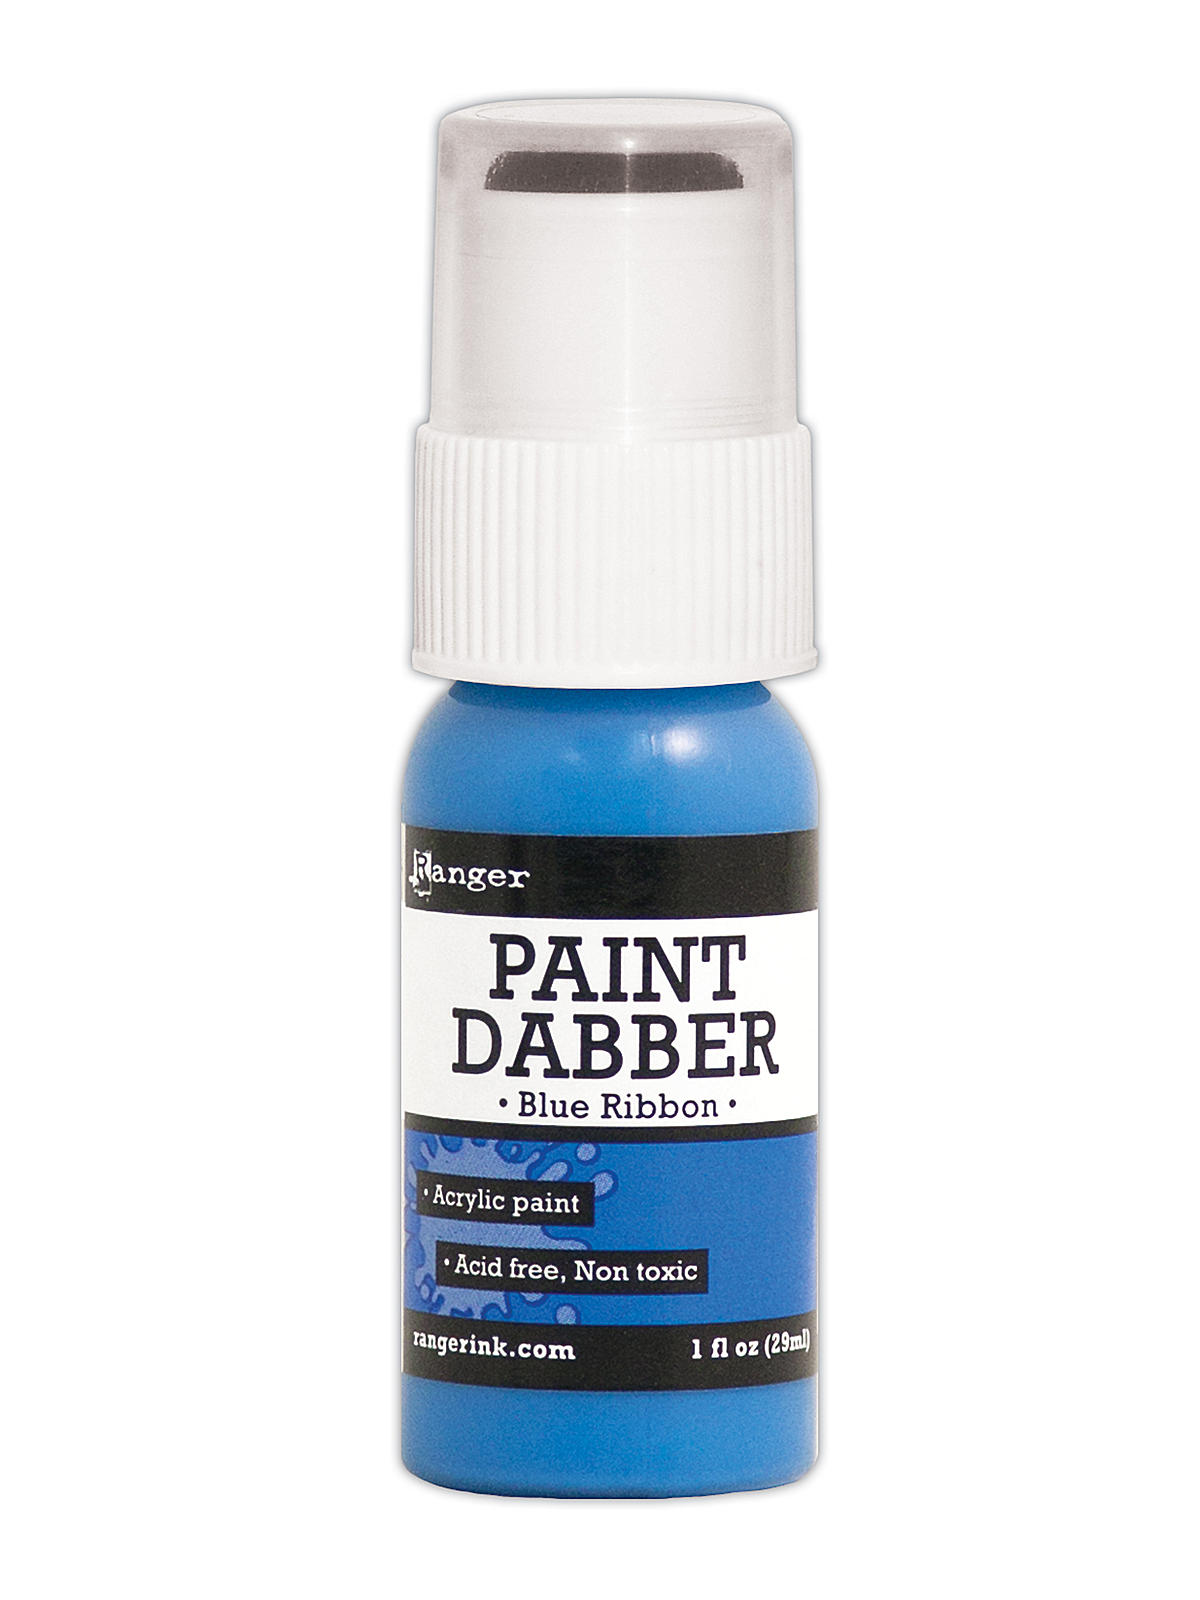 Acrylic Paint Dabbers Bottle 1 Oz. Blue Ribbon